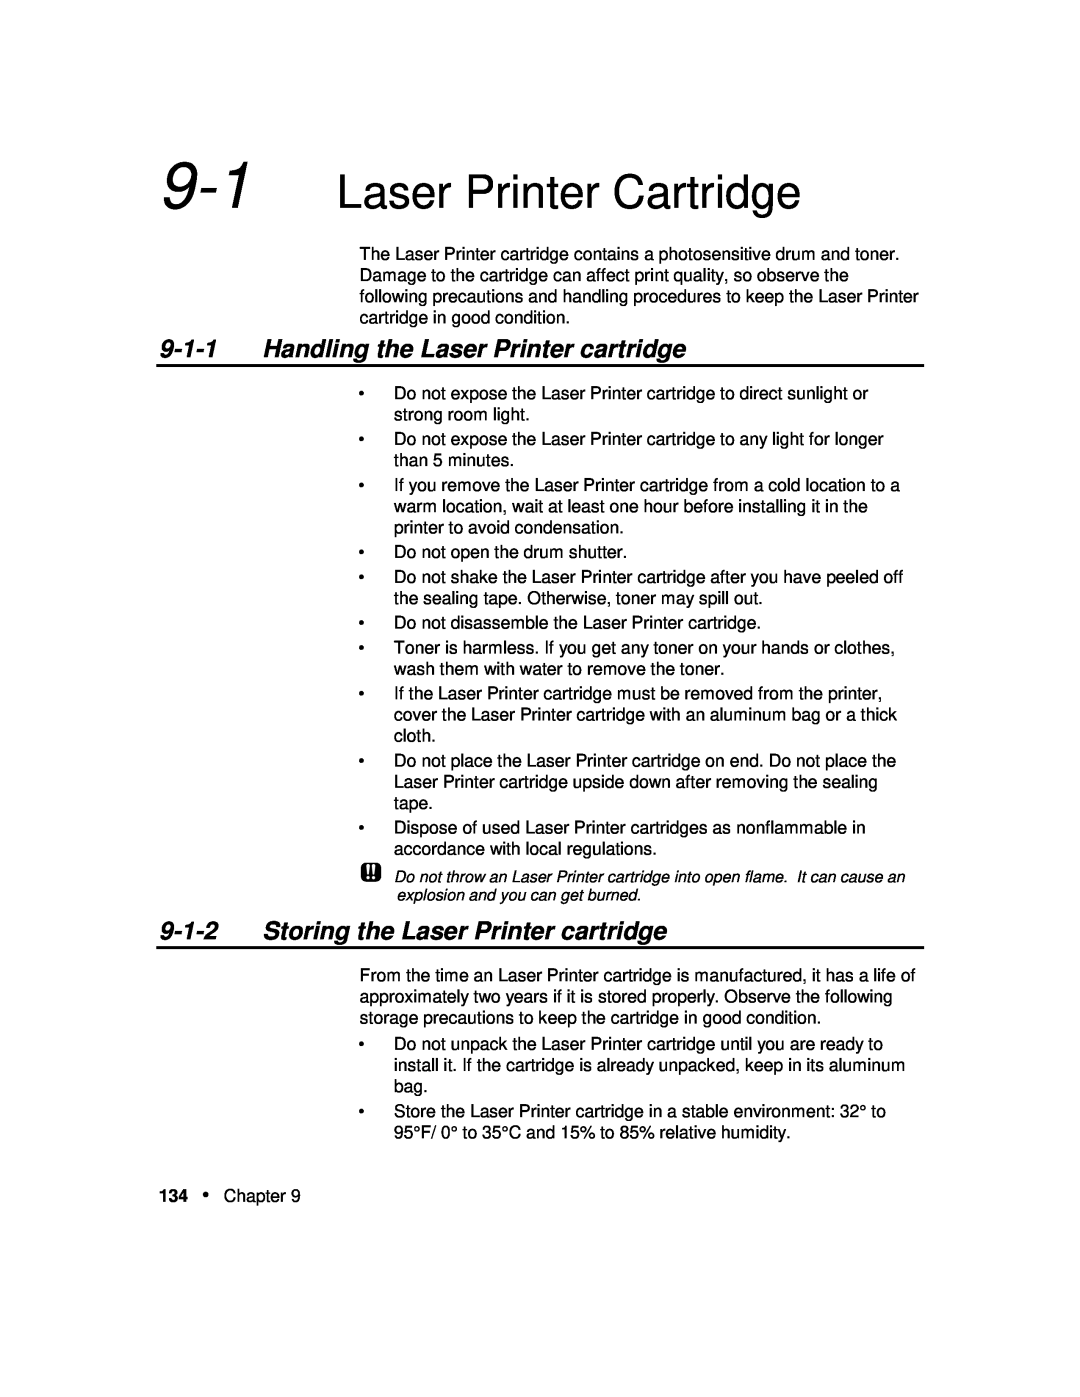 Xerox P12 manual Laser Printer Cartridge, Handling the Laser Printer cartridge, Storing the Laser Printer cartridge 